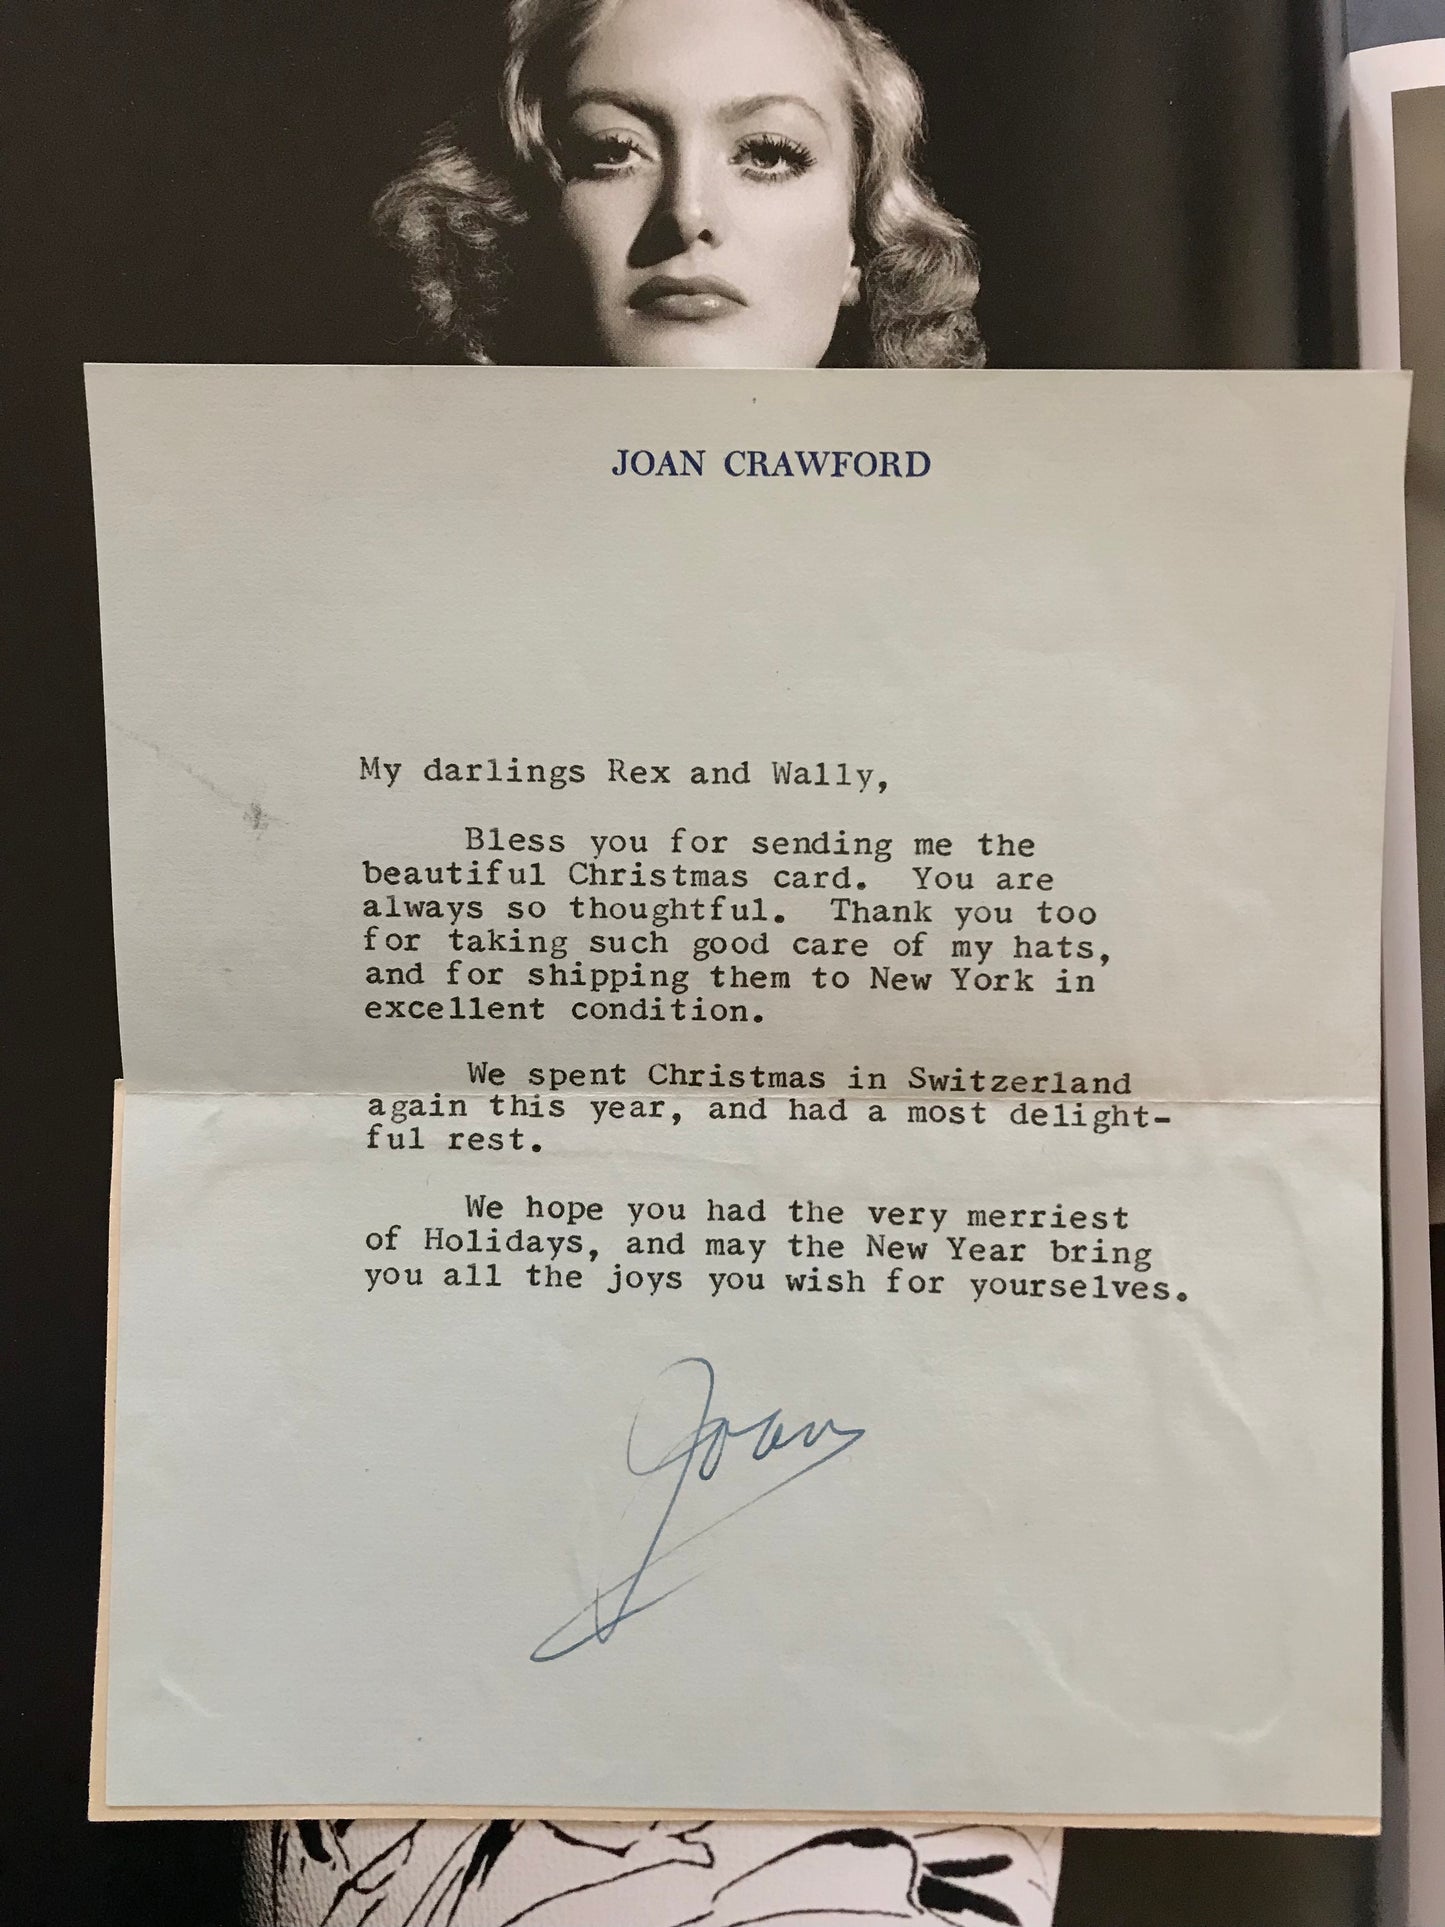 Lettre signée par Joan Crawford, circa 1970